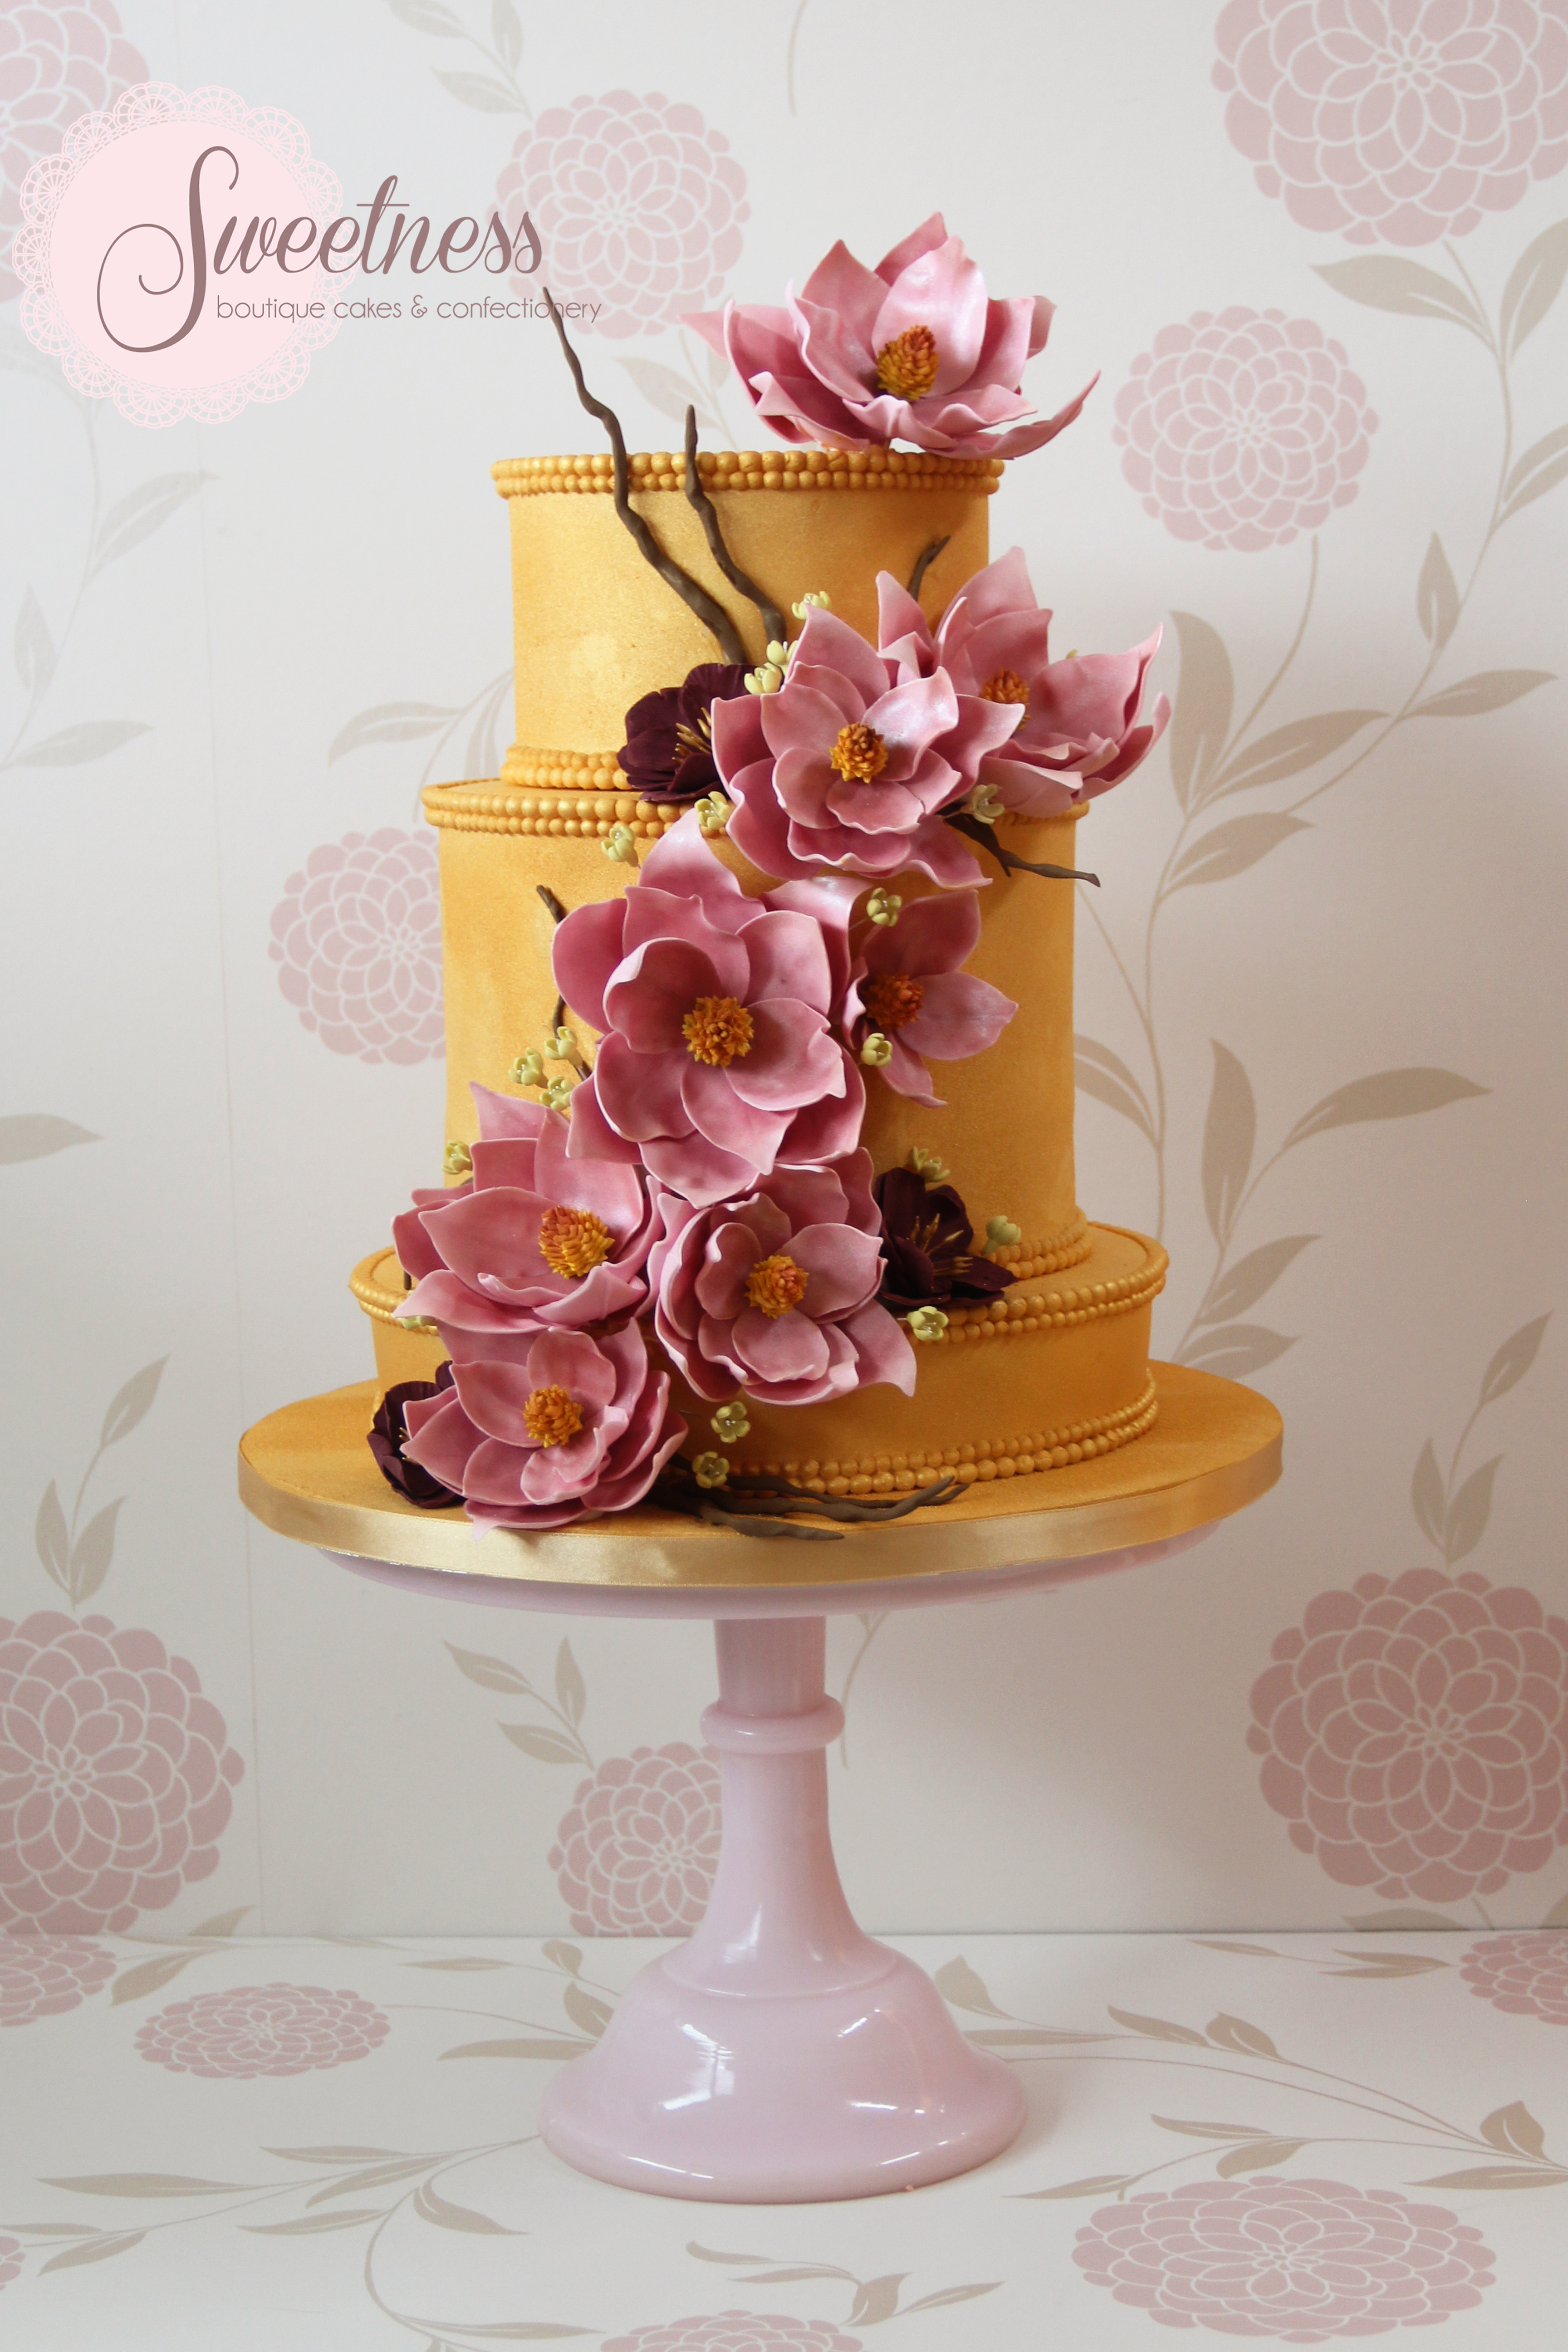 metallic wedding cakes, wedding cakes london, gold wedding cakes london, japanese wedding cakes london